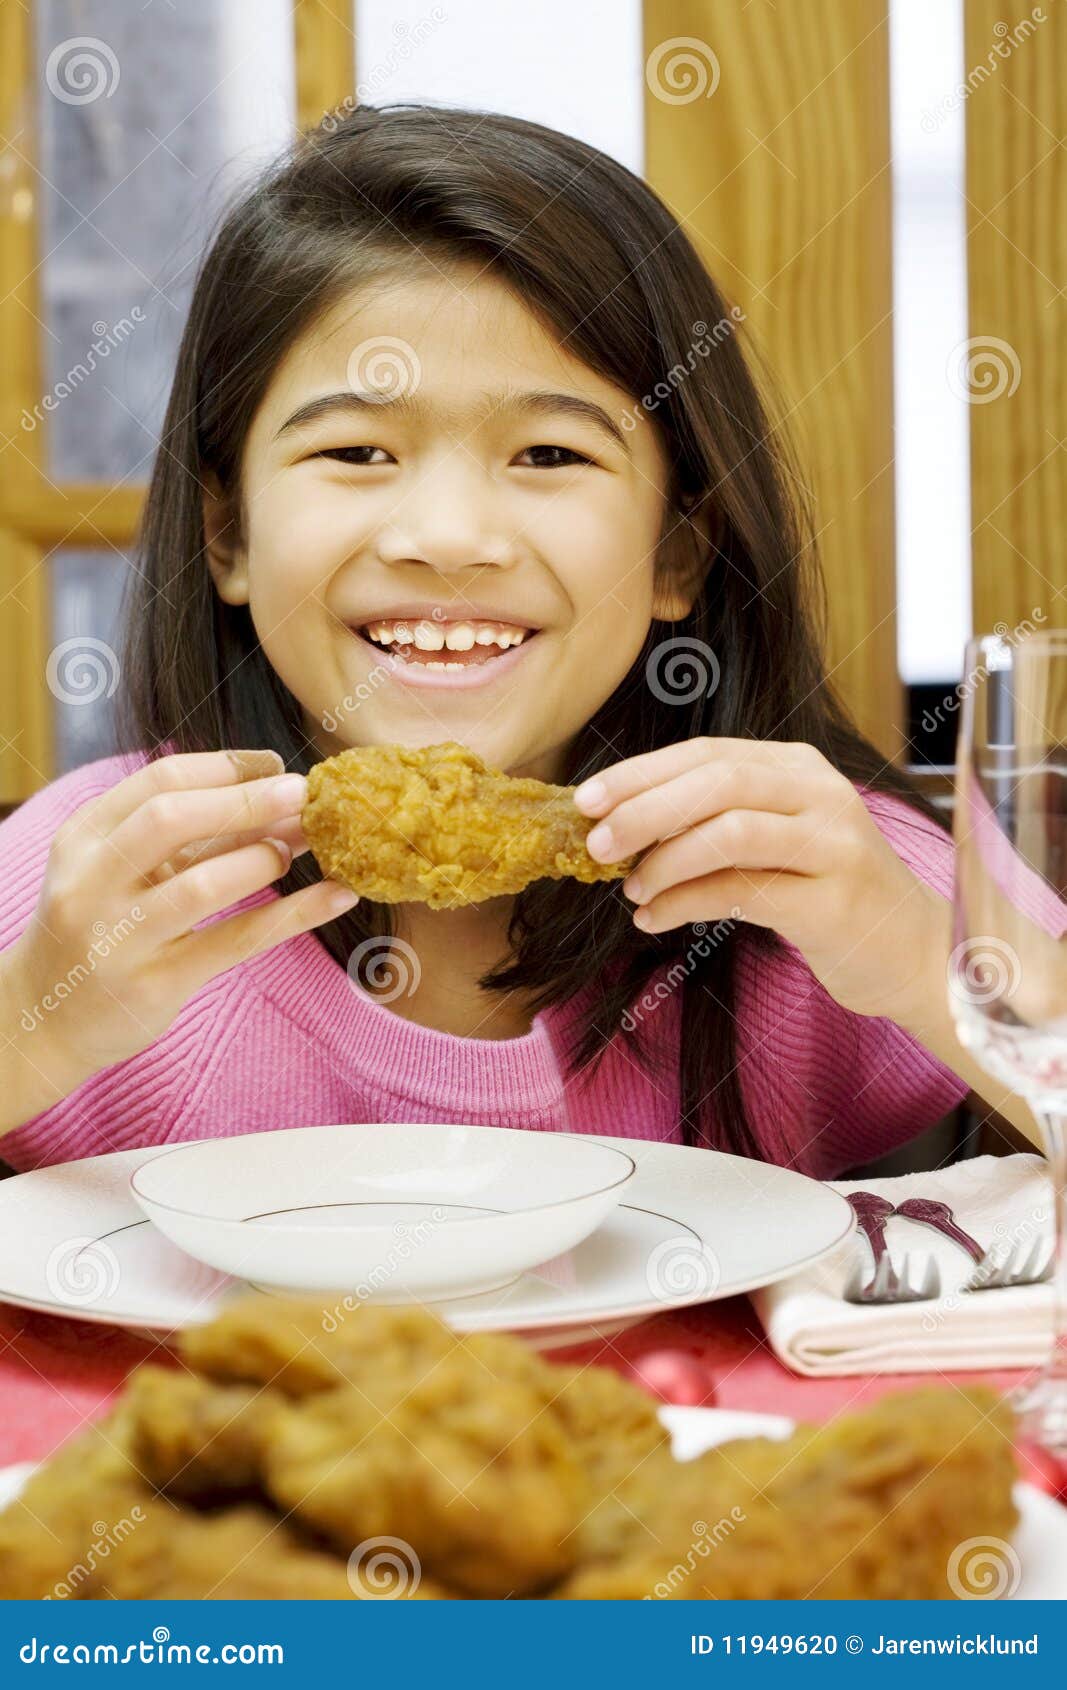 girl eating fried chicken drumstick